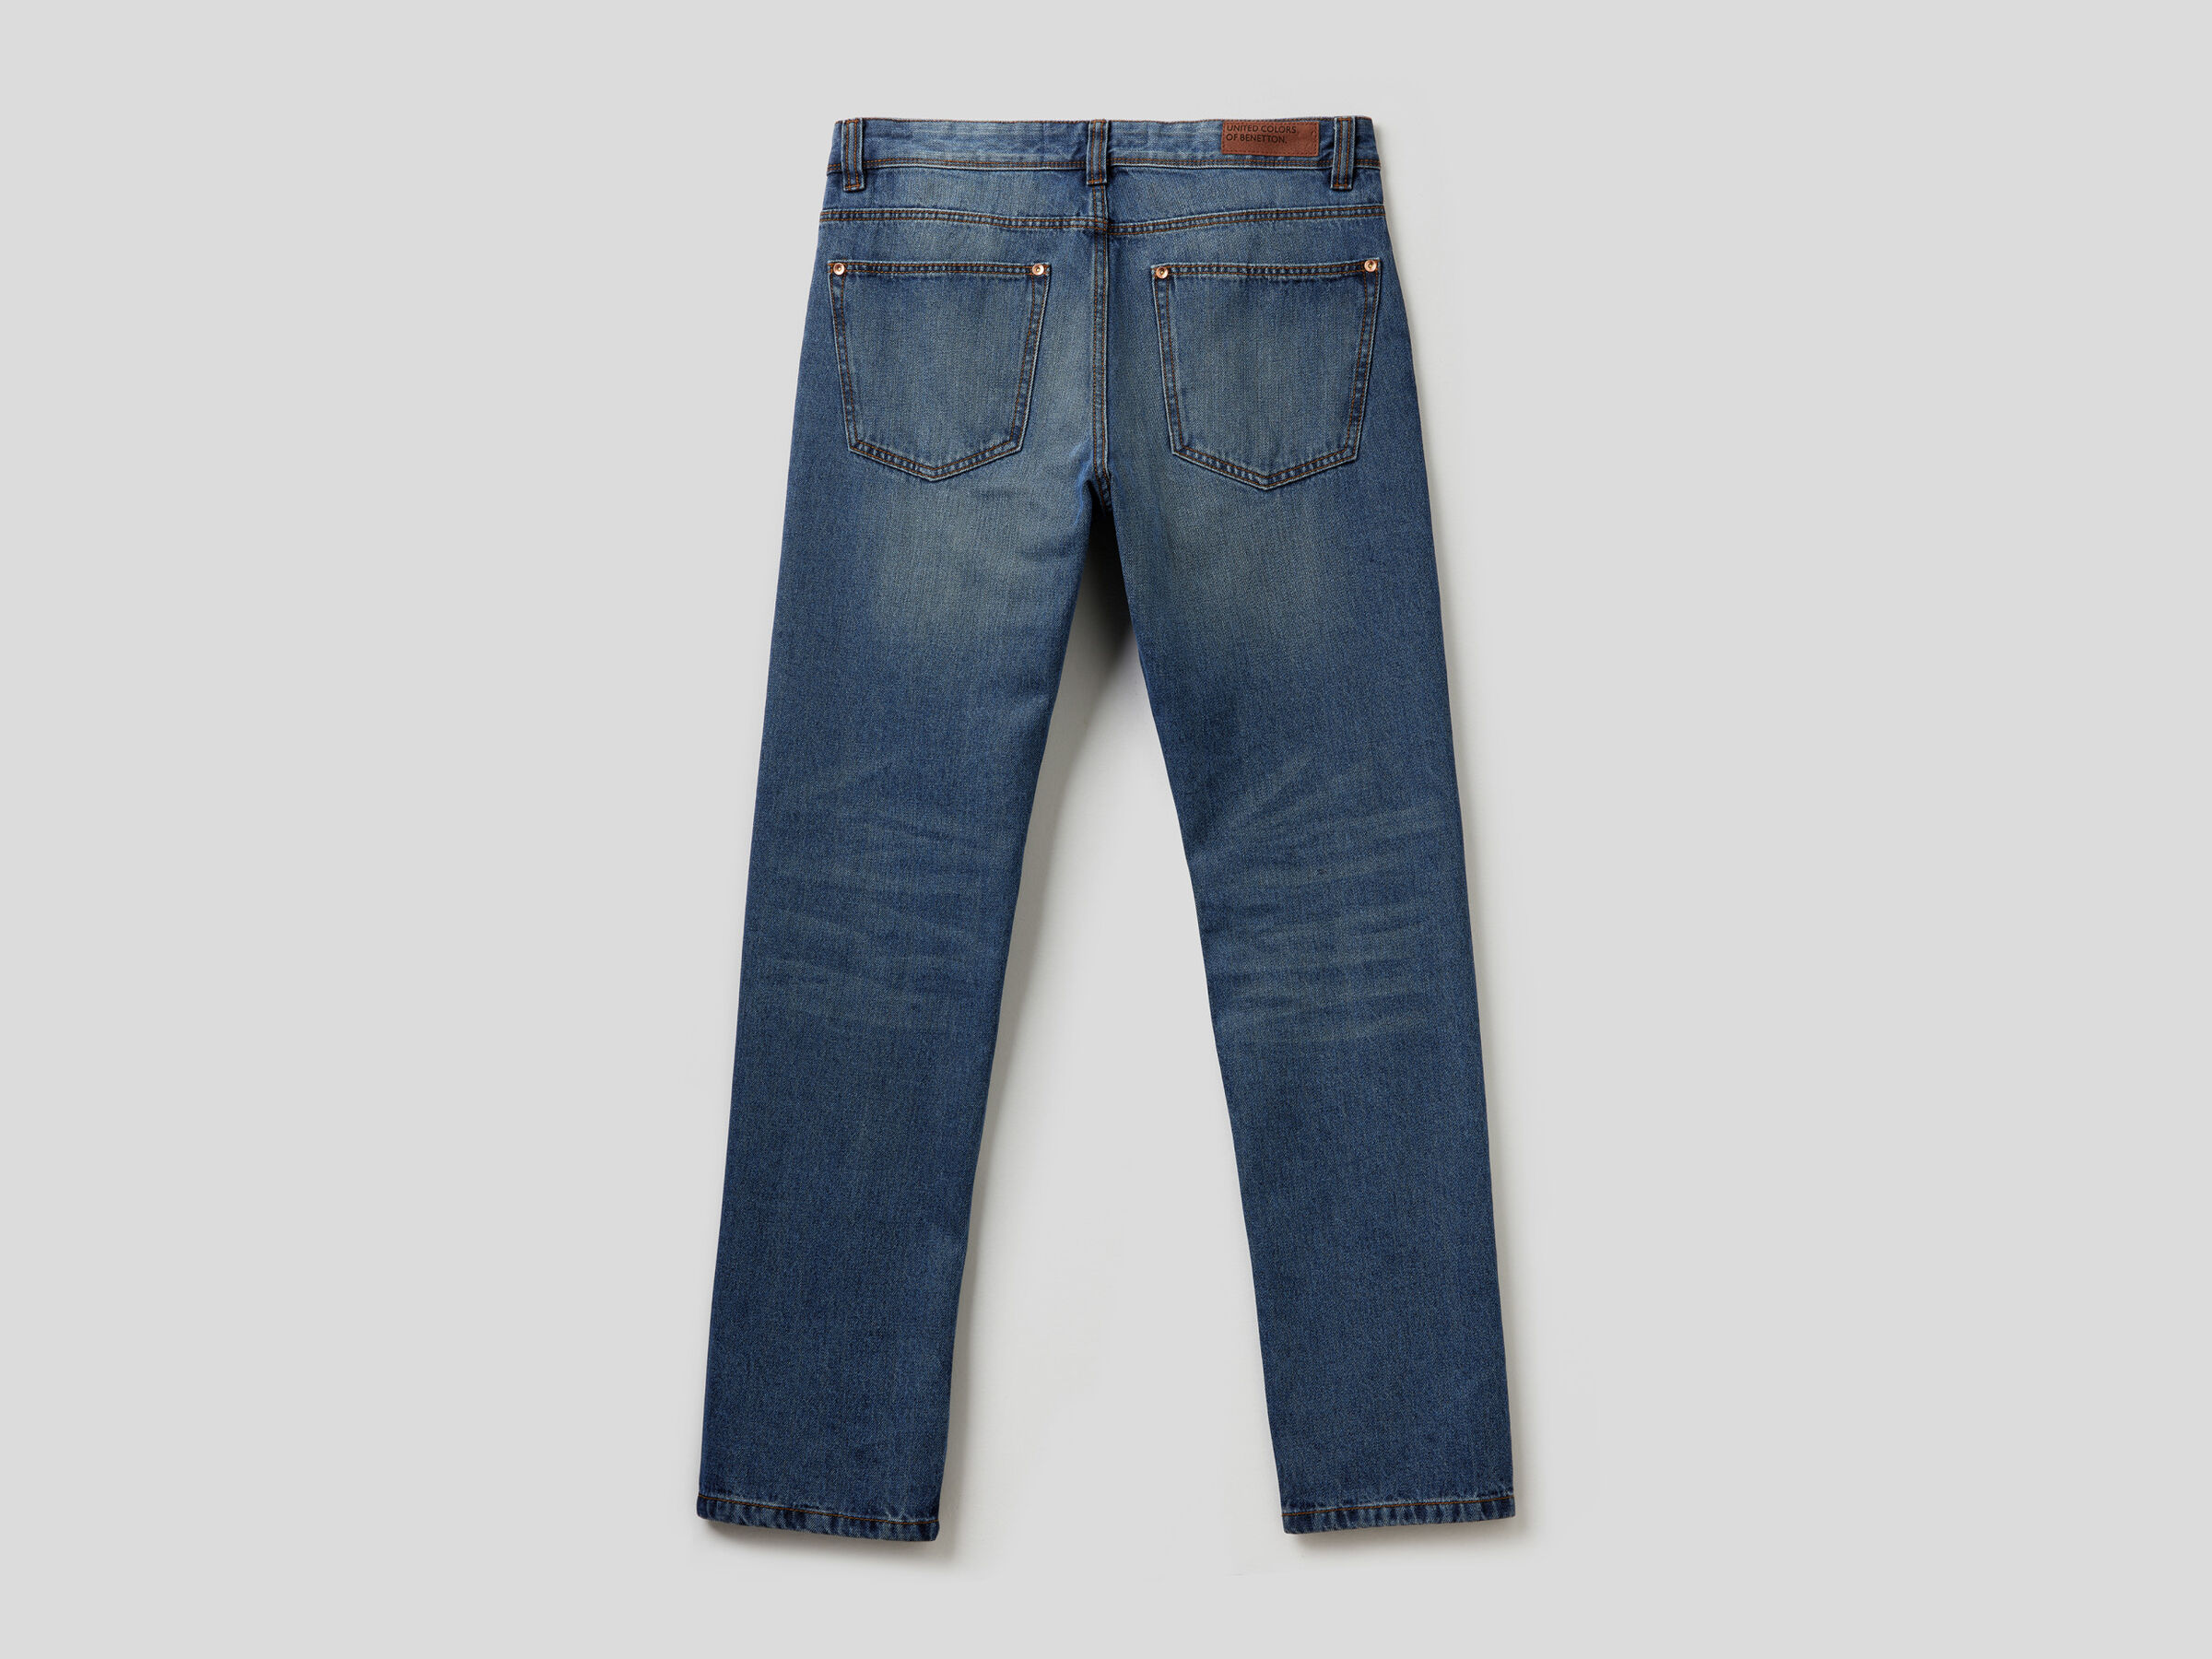 Straight leg 100% cotton jeans